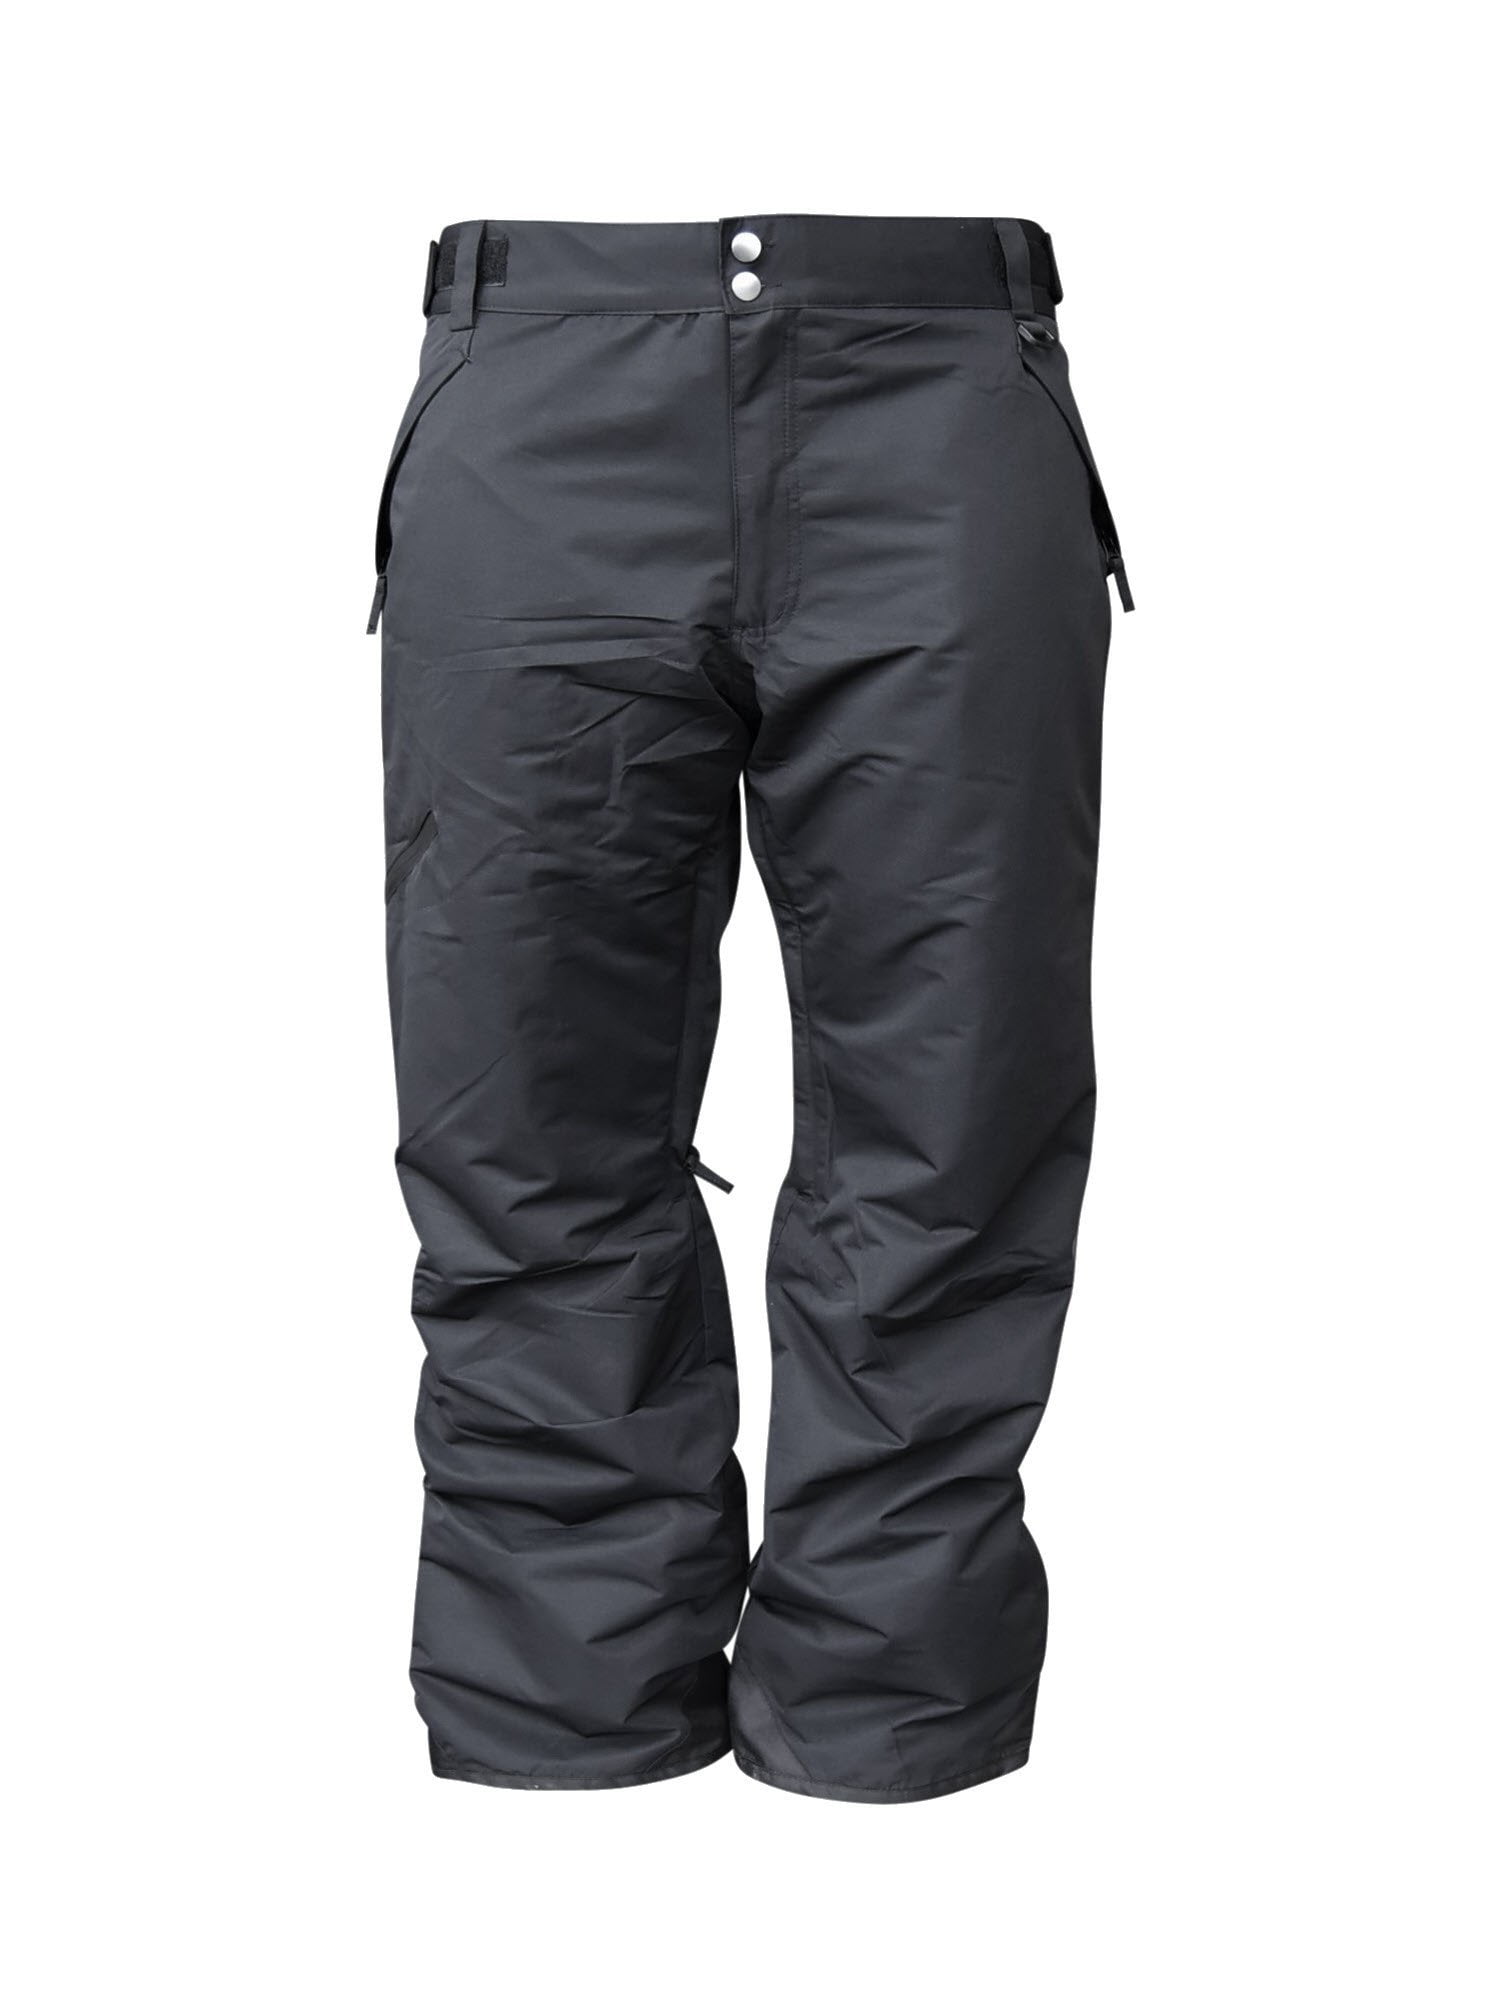 YuKaiChen Men's Snow Pants Ski Ripstop Bottoms Windproof Waterproof Insulated Winter Sports Trousers 